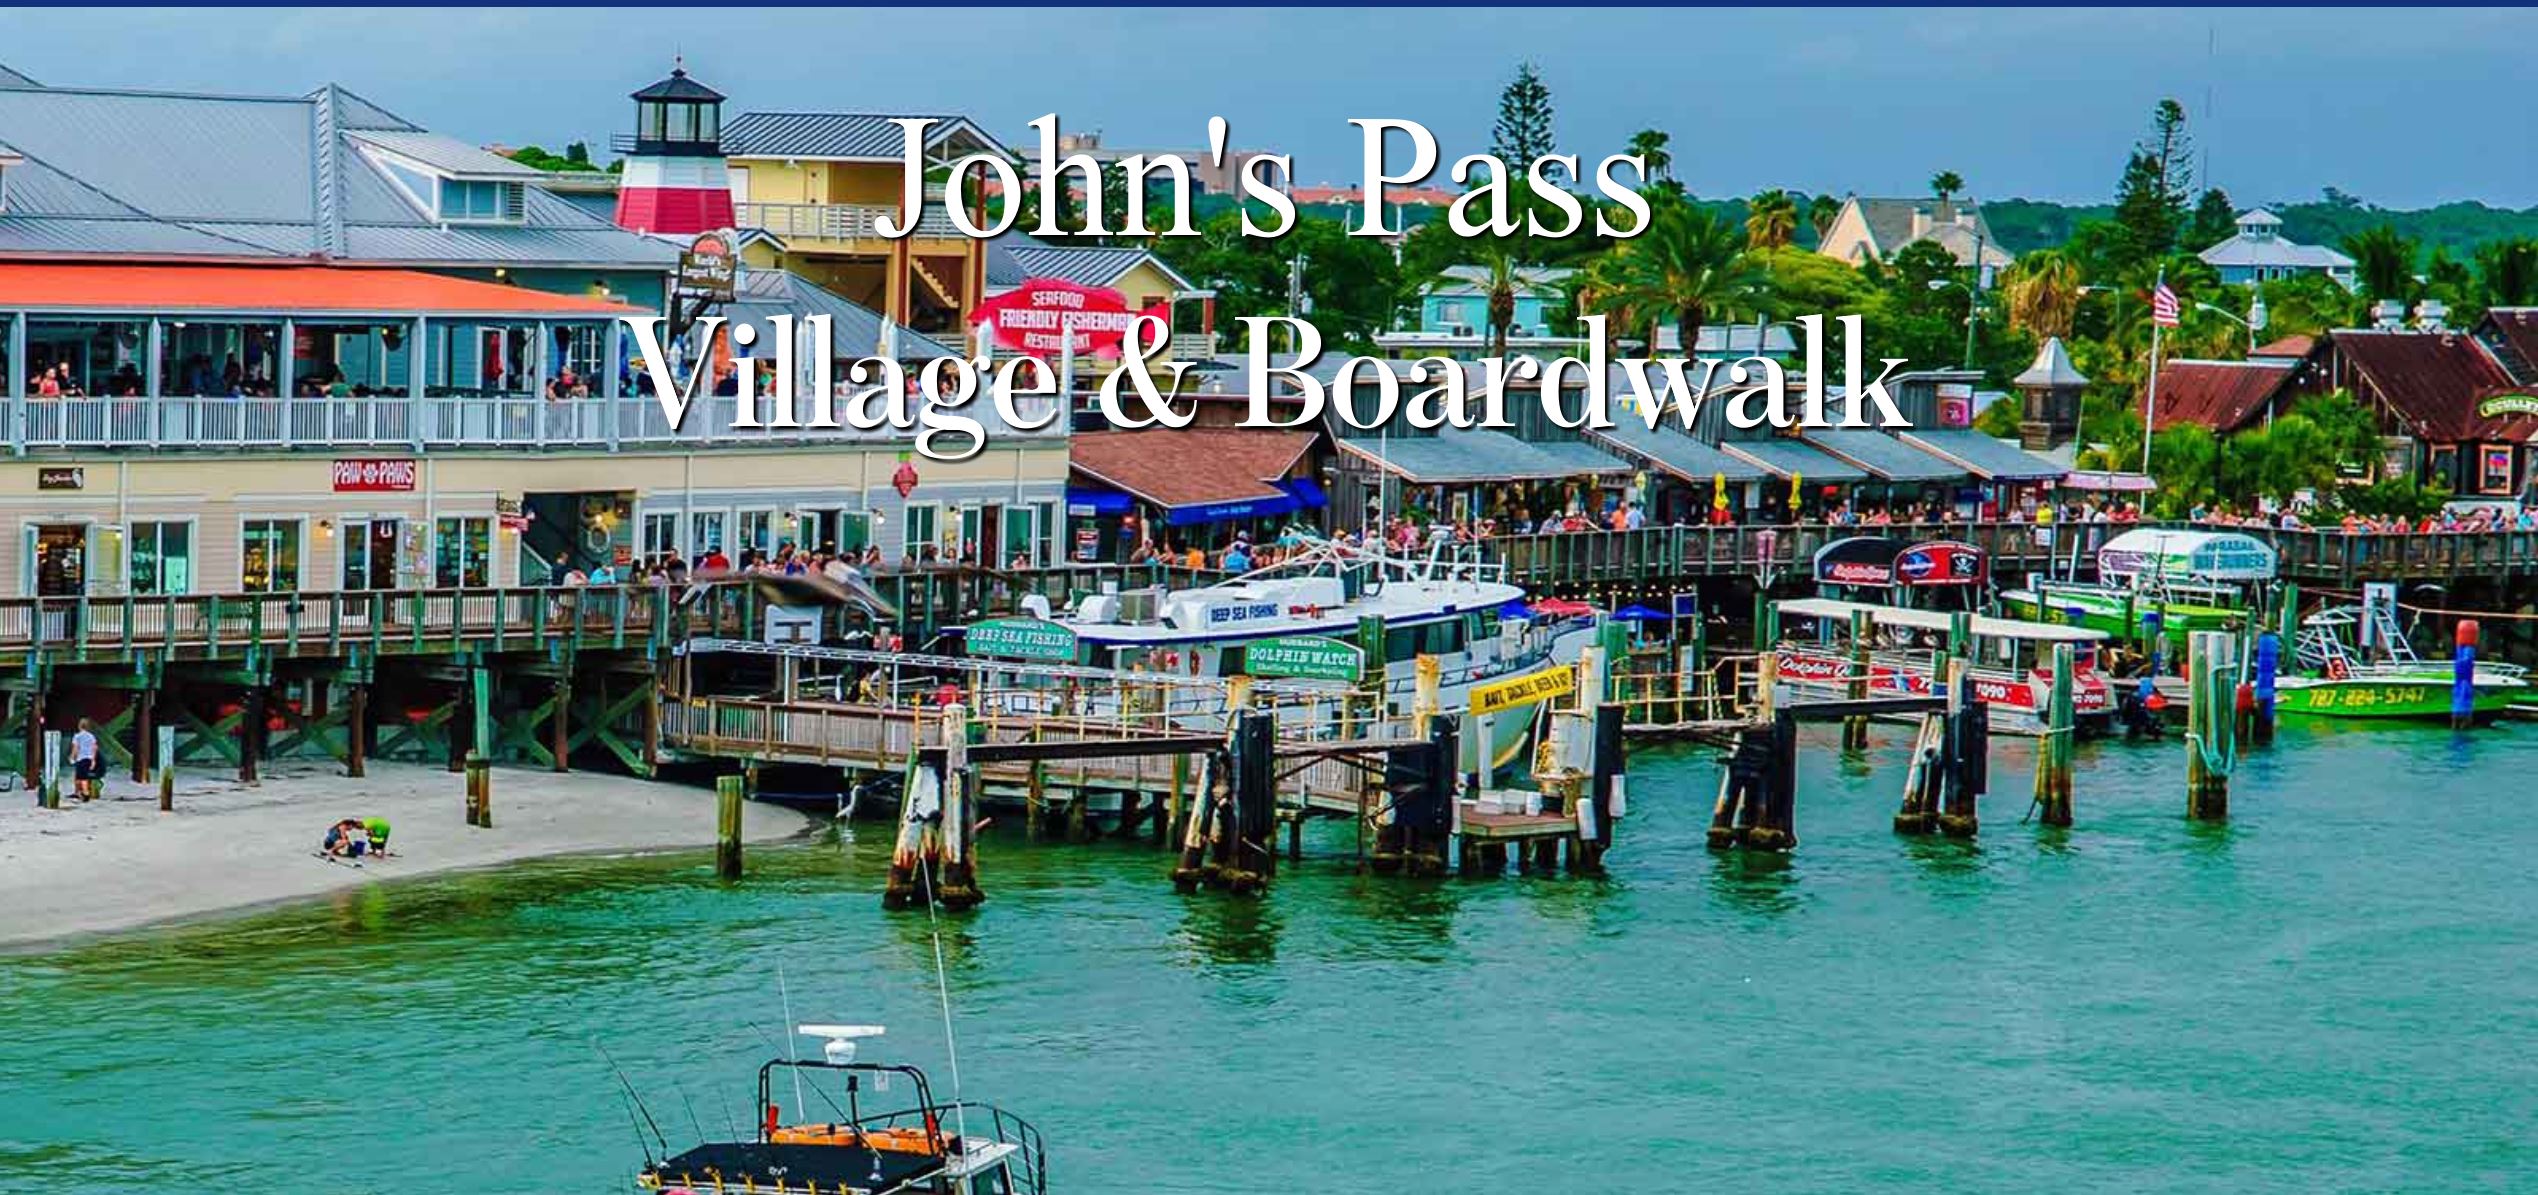 St. John's Pass Village and Boardwalk